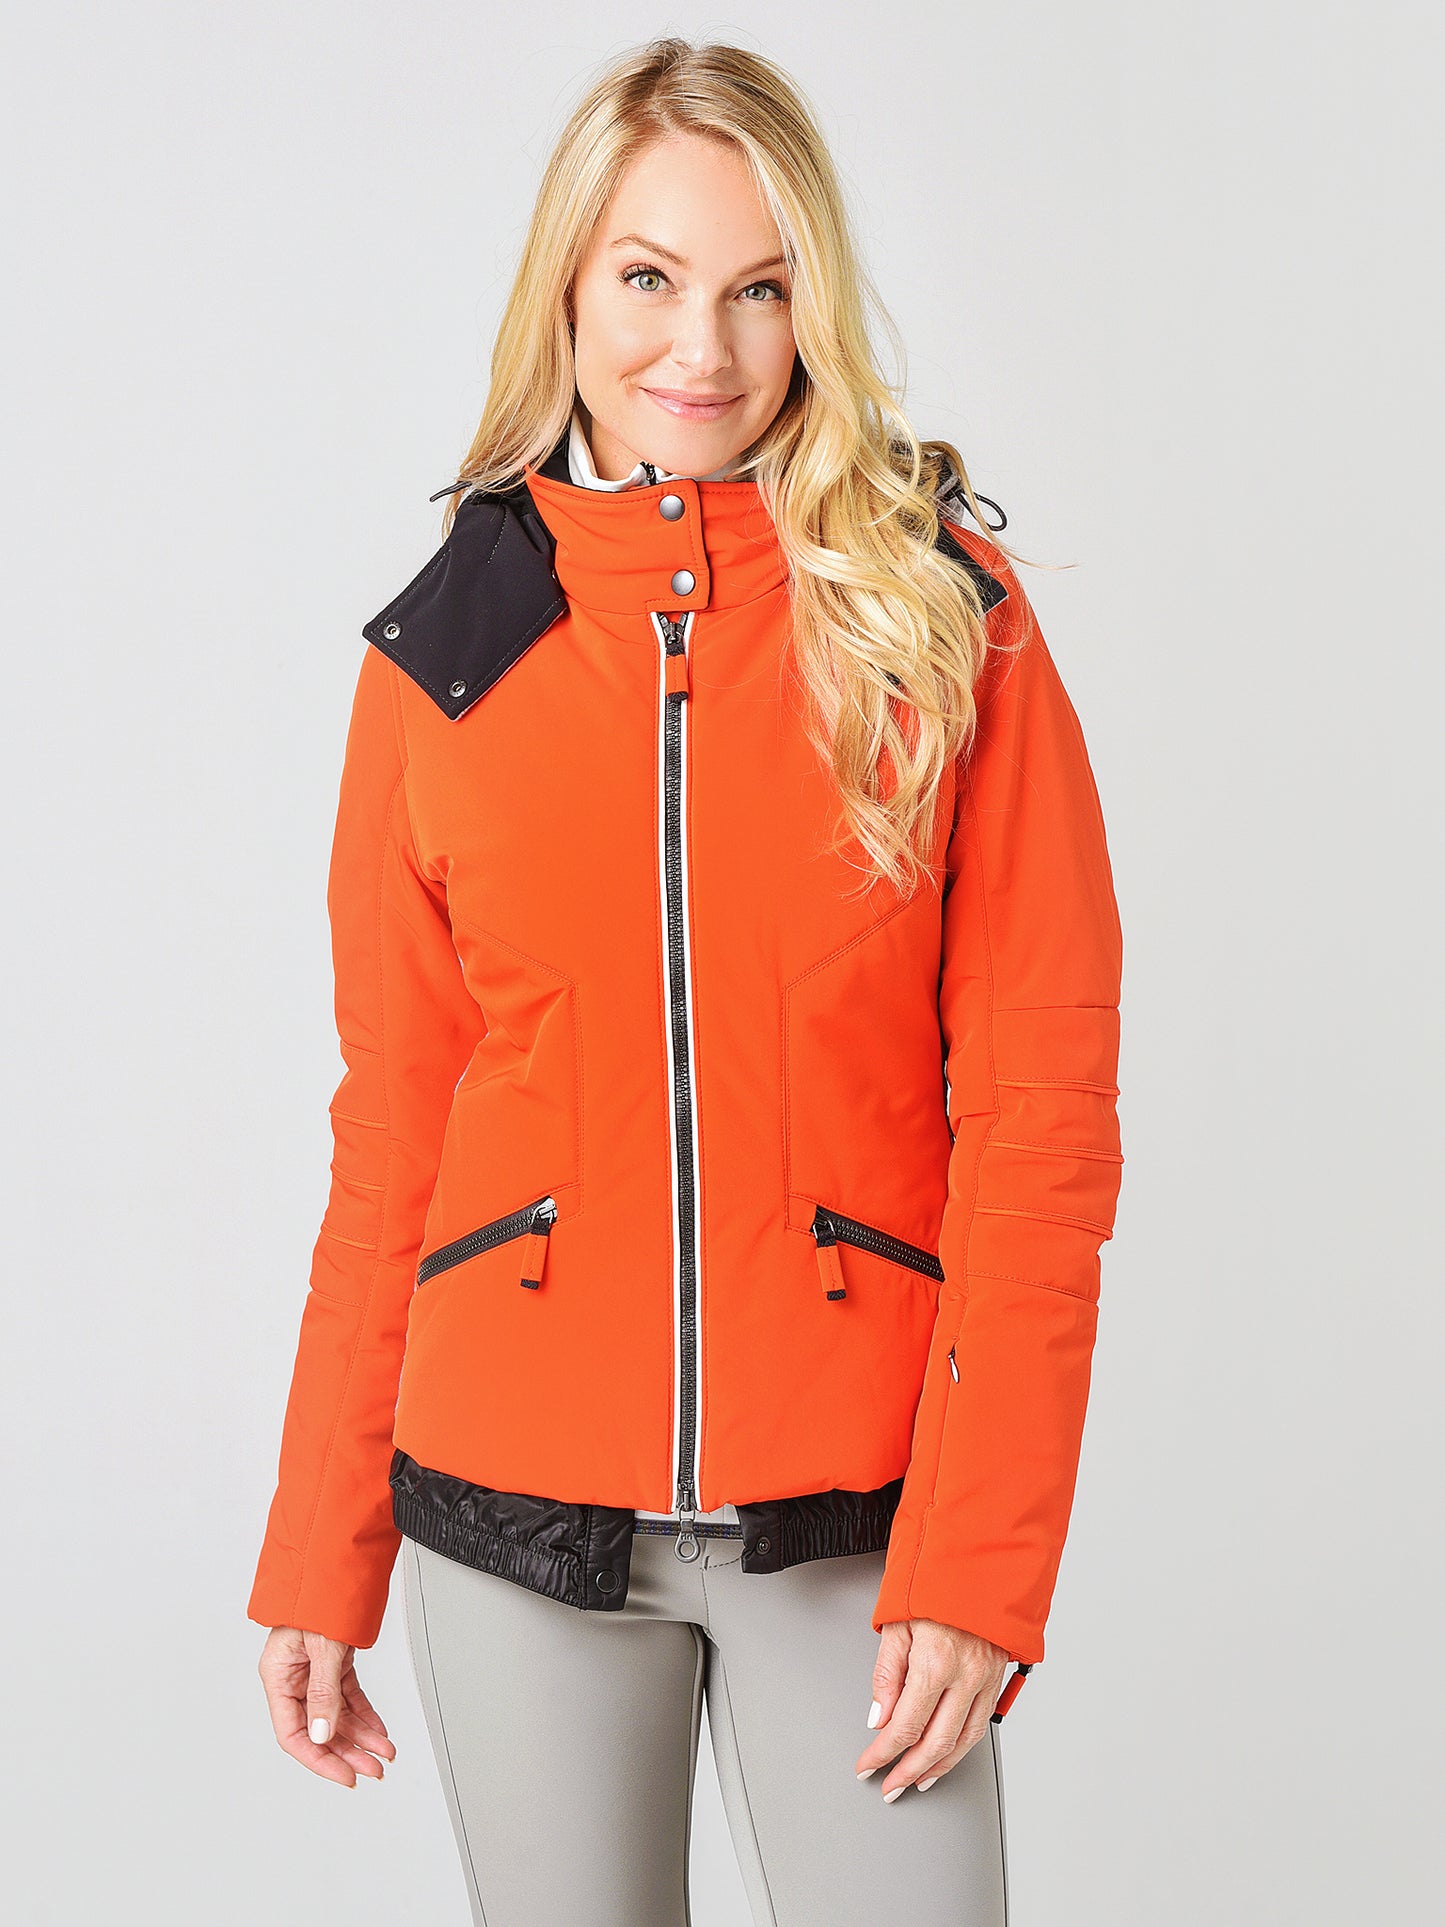 Frauenschuh Women's Mona Multi Ski Jacket